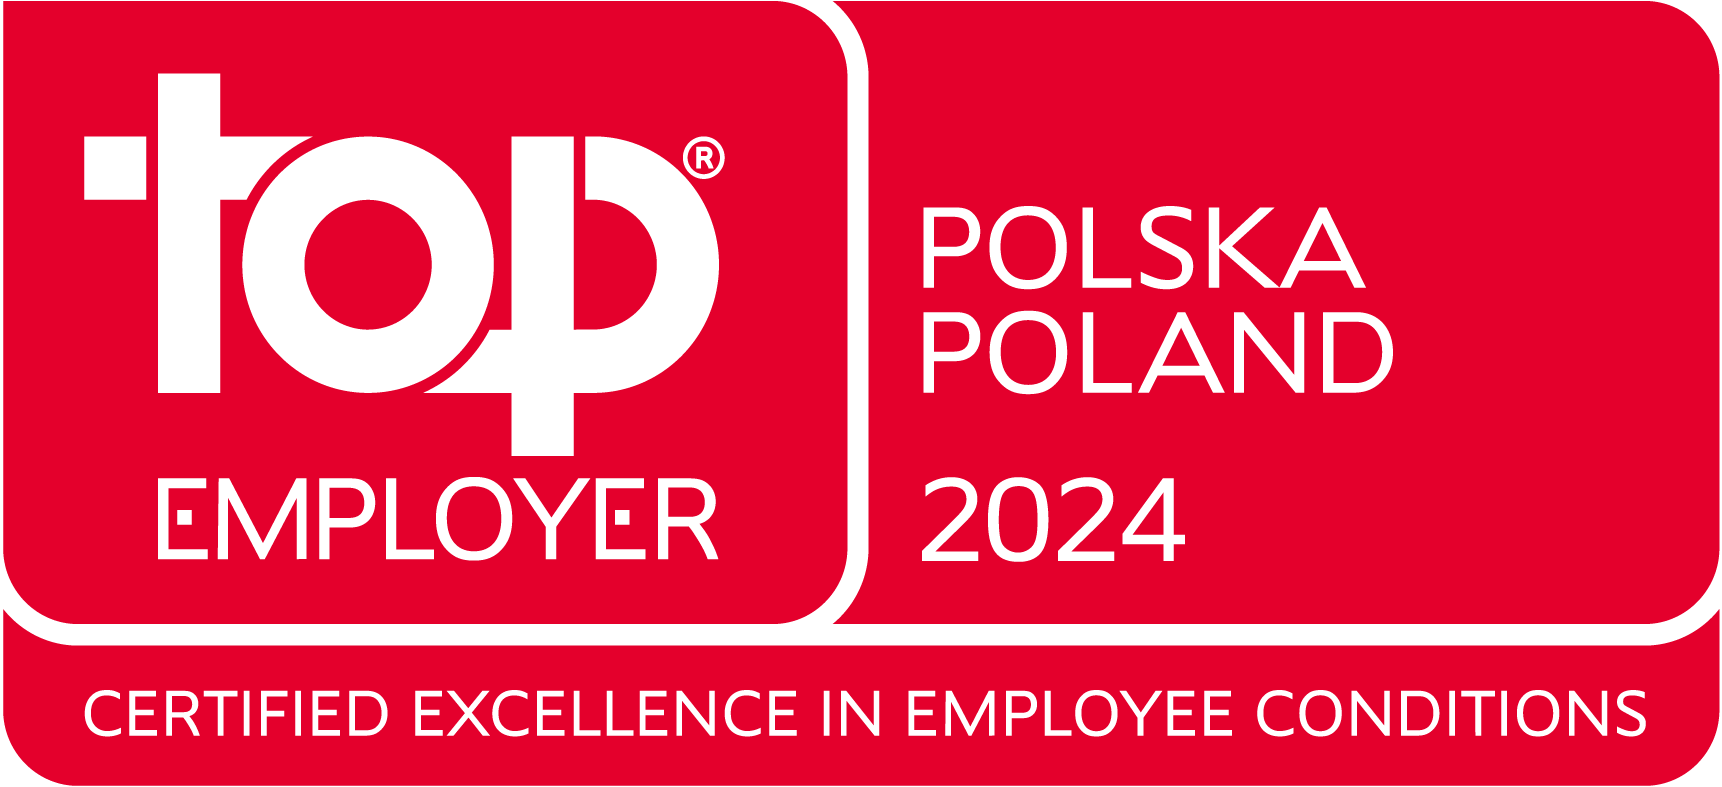 Top employer 2024